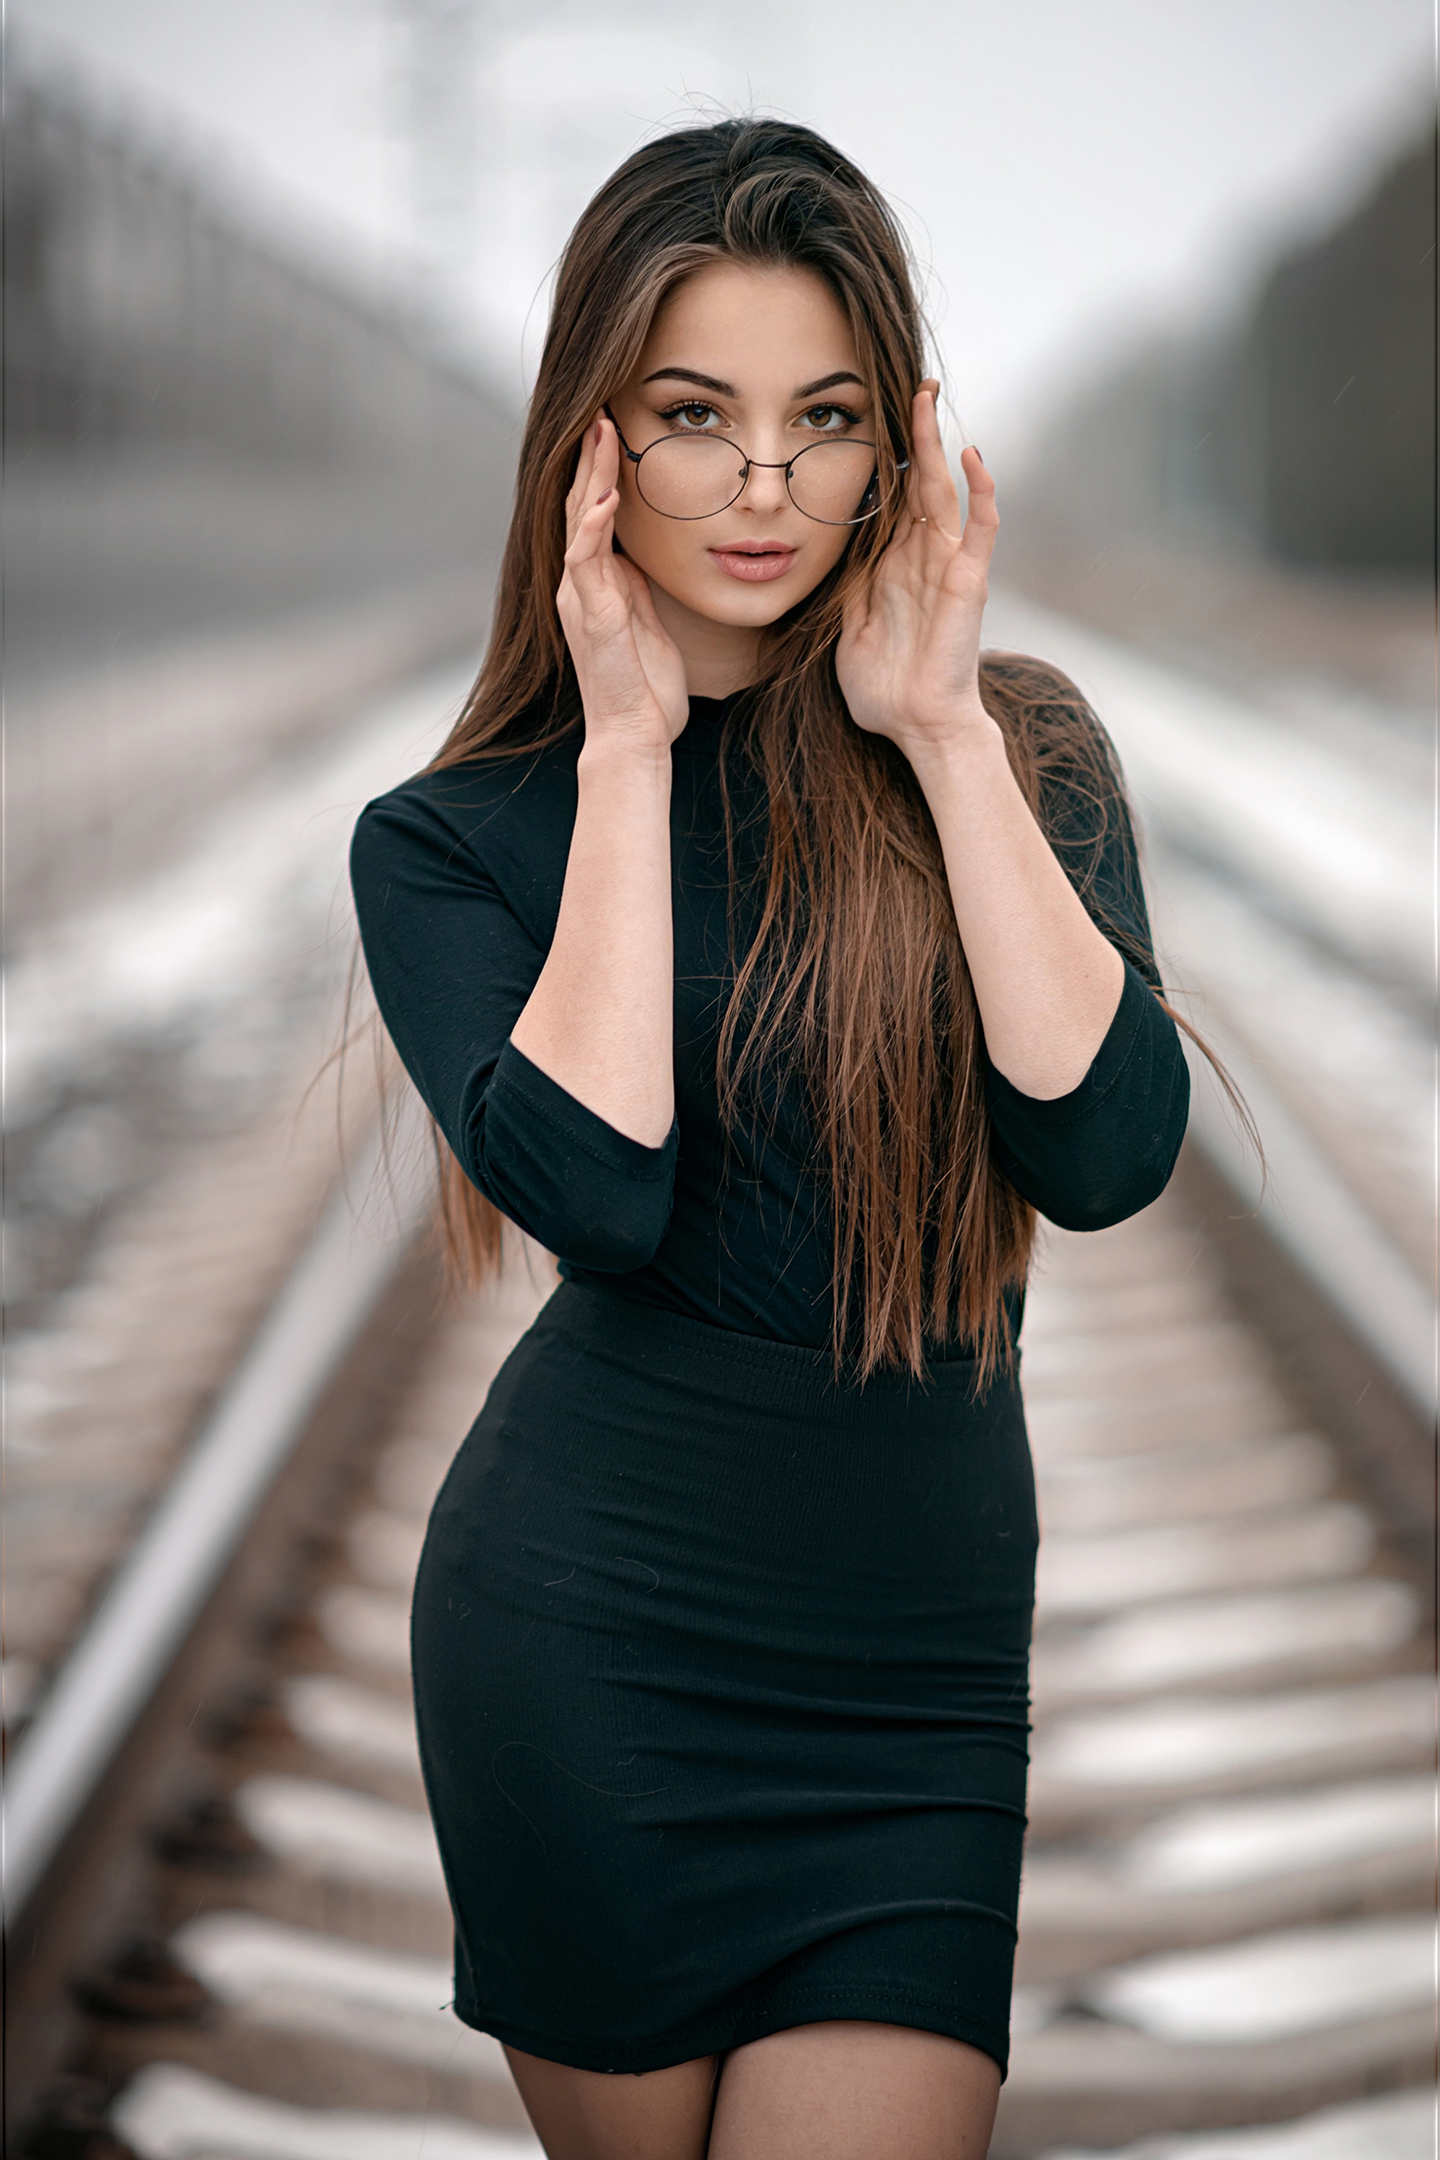 W Darius Women Brunette Long Hair Glasses Looking At Viewer Dress Green Clothing Railway Depth Of Fi 1440x2160